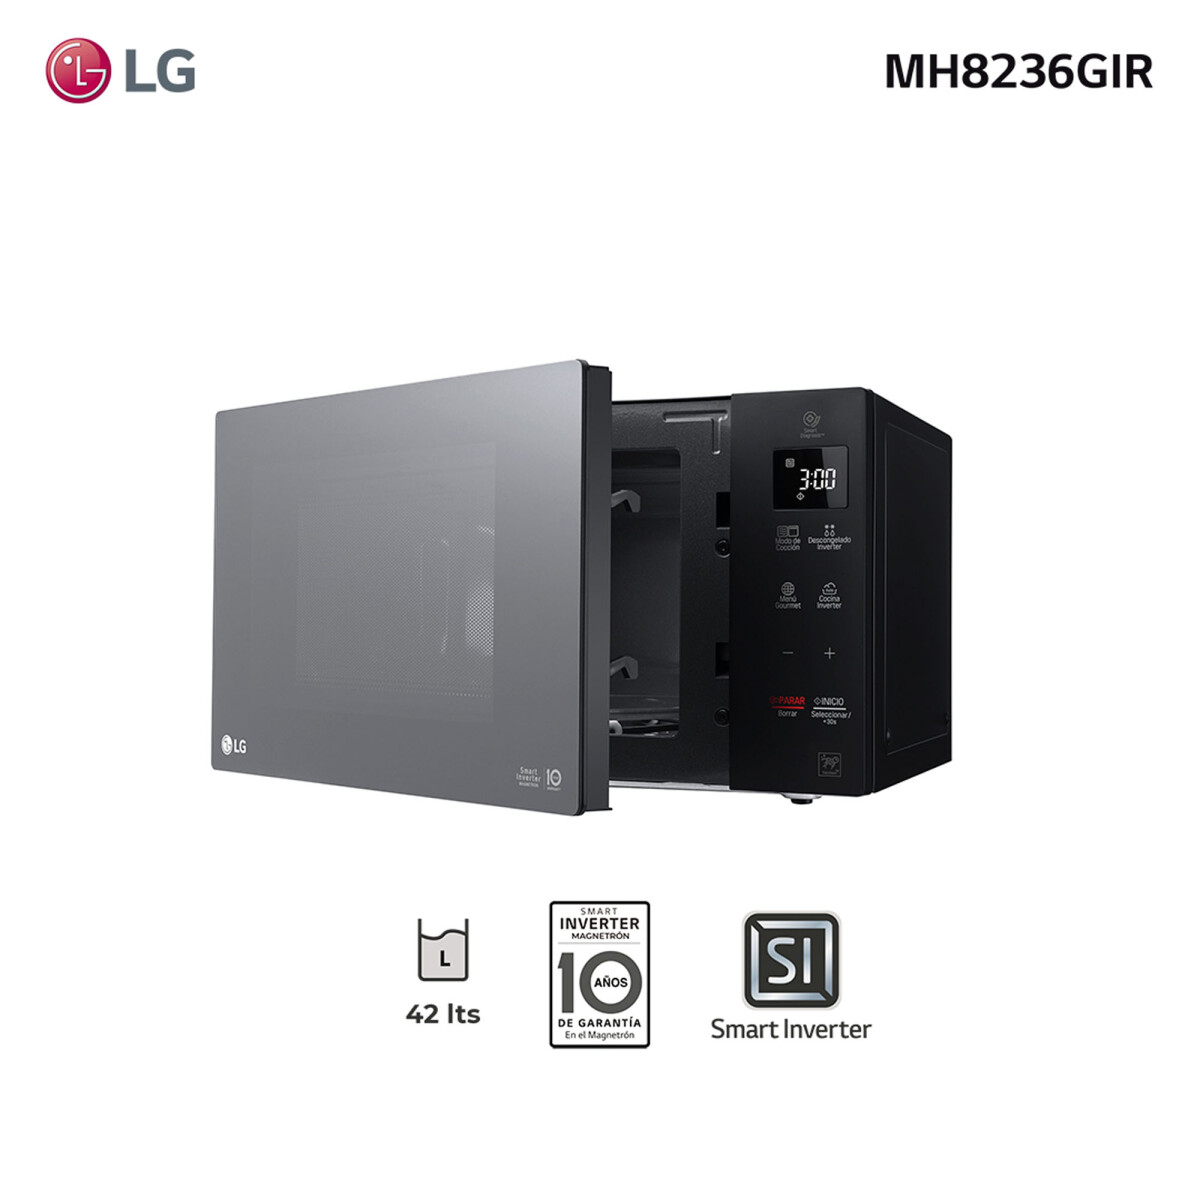 Microondas LG Mod. MH8236GIR 42 L grill inverter - Disco